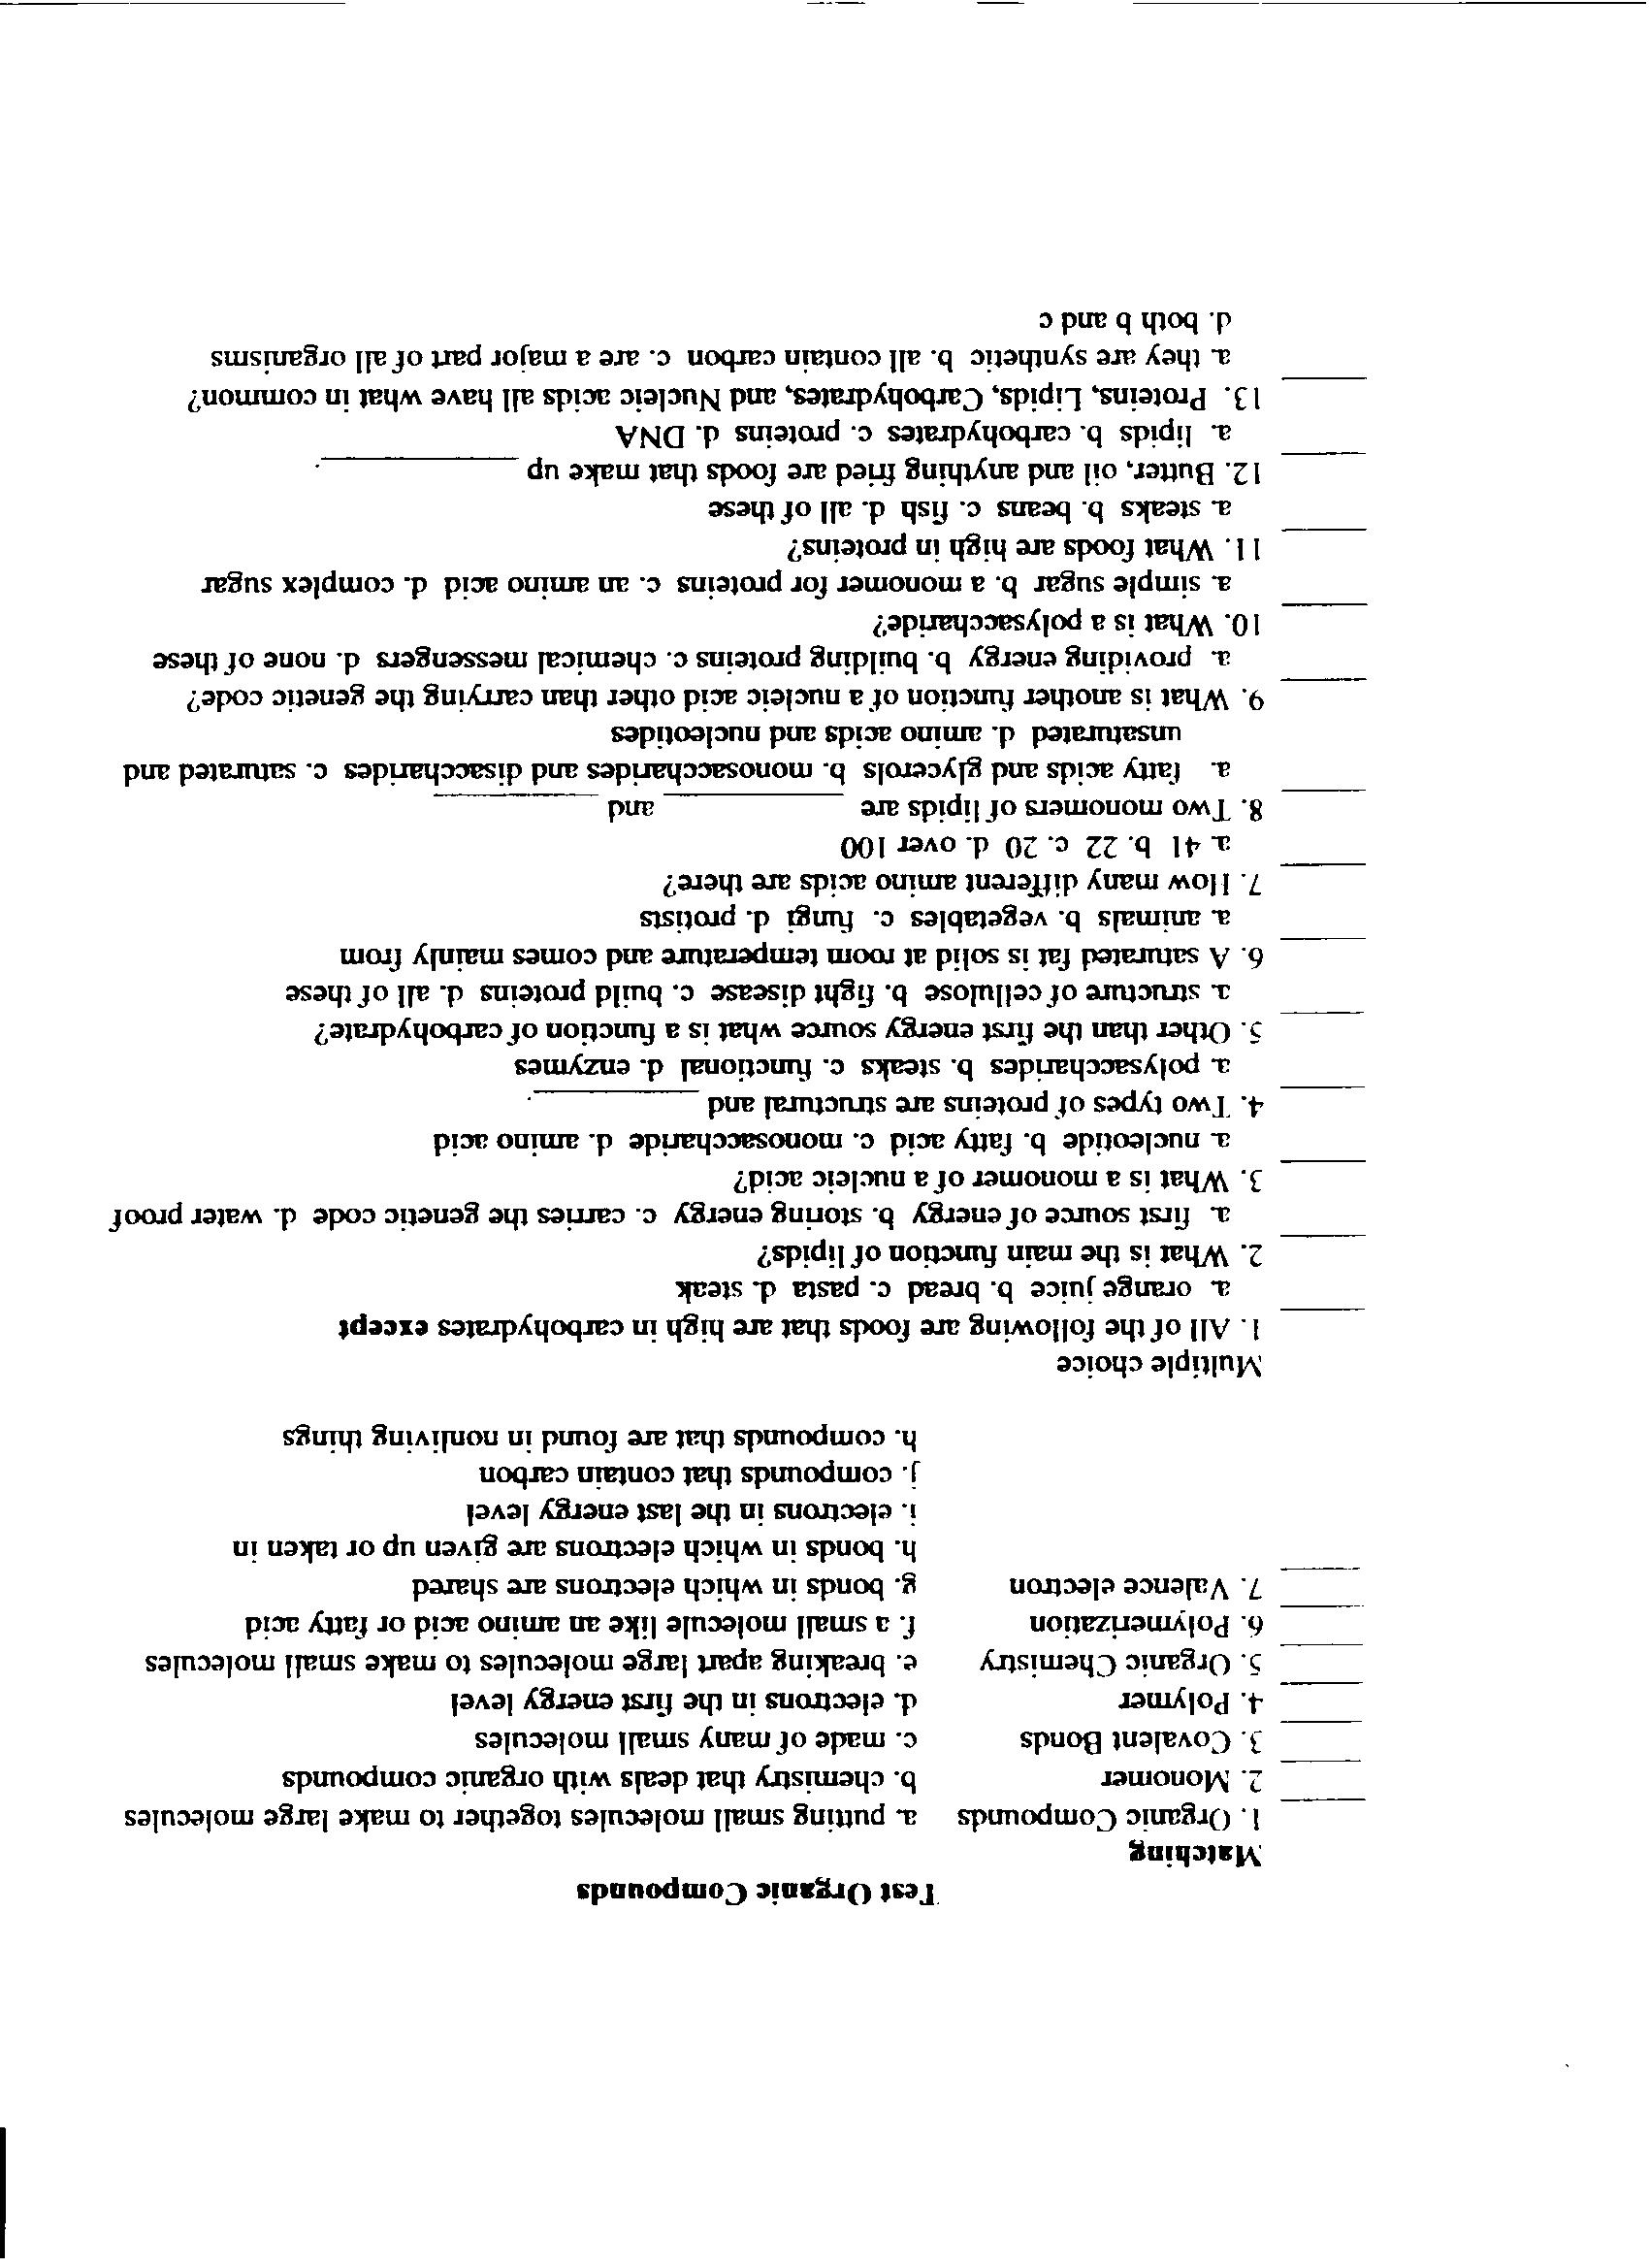 17 Images of Biology Organic Compounds Worksheet